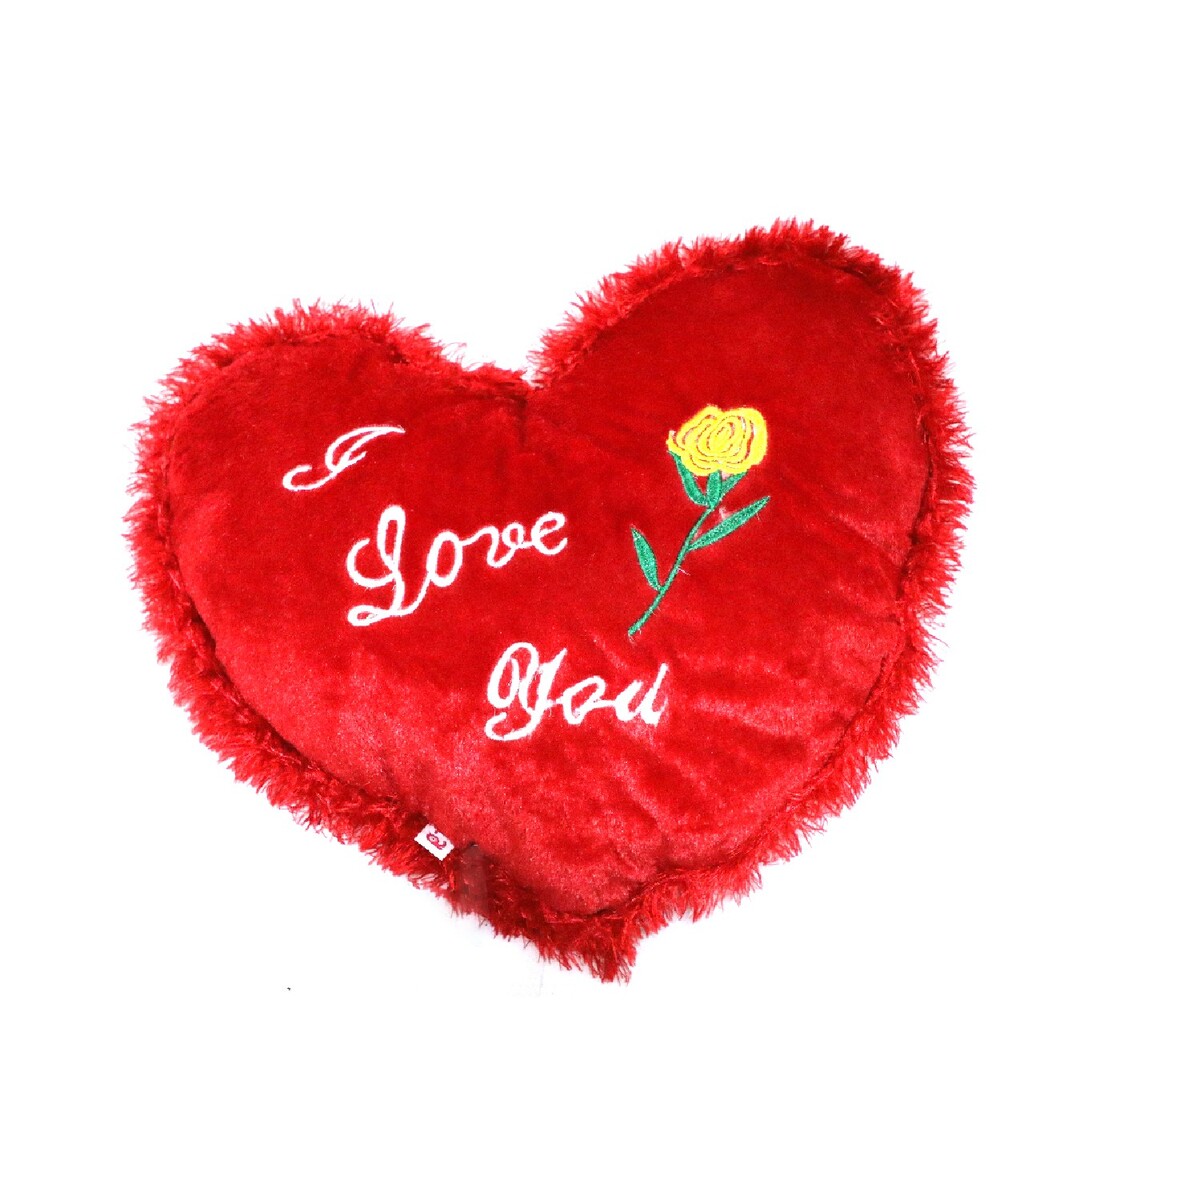 Merry I Love You Heart Cushion -1001